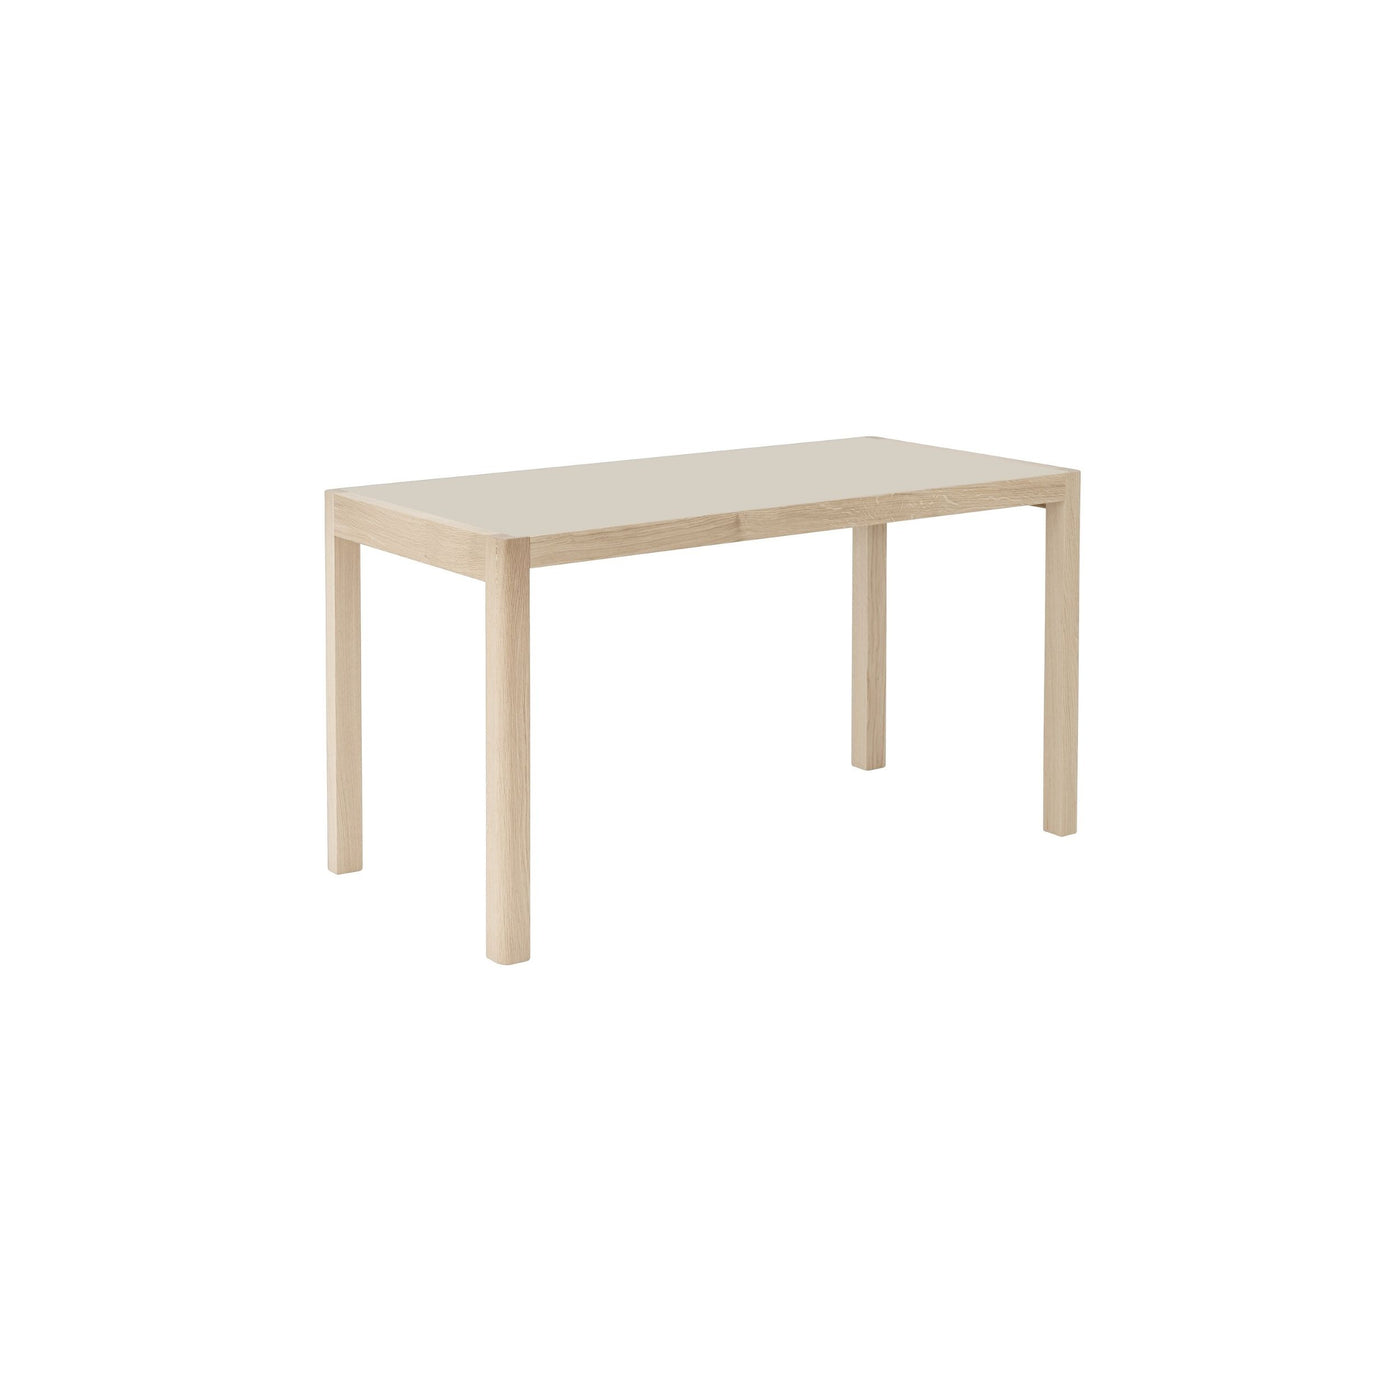 Muuto Workshop Table in warm grey lino/oak. Shop online at someday designs. #size_65x130